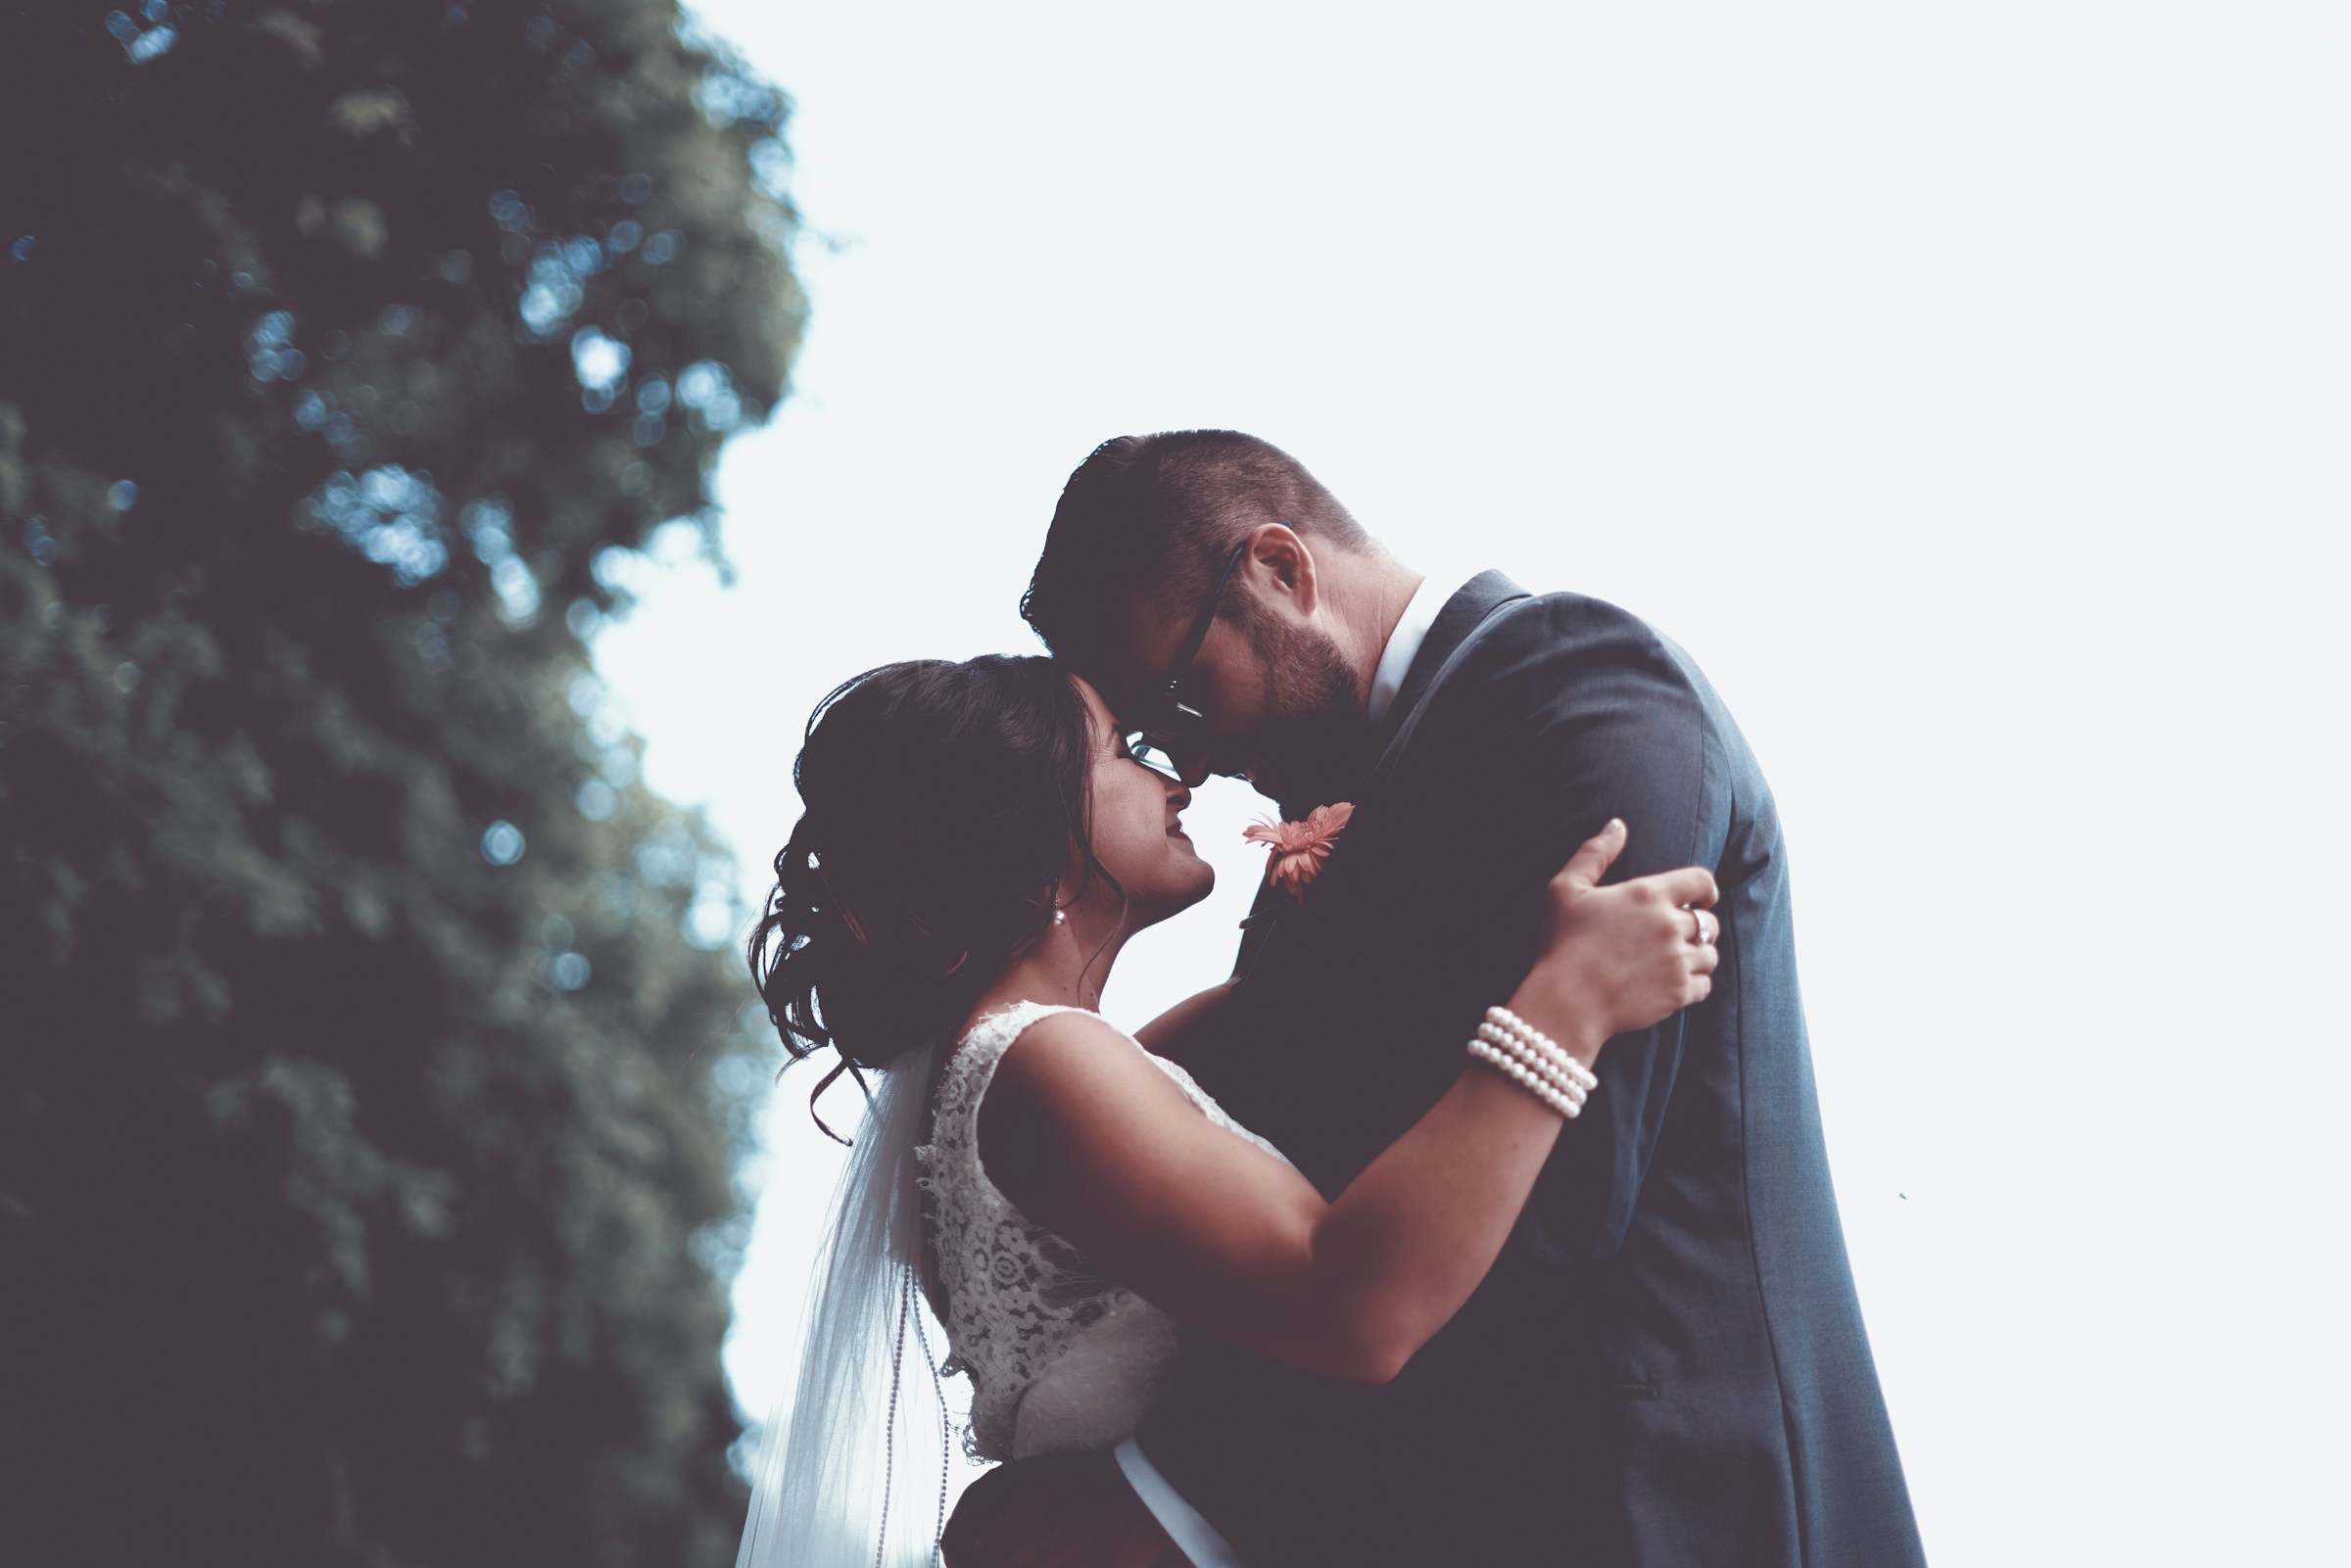 A bride and groom embracing | Source: Unsplash